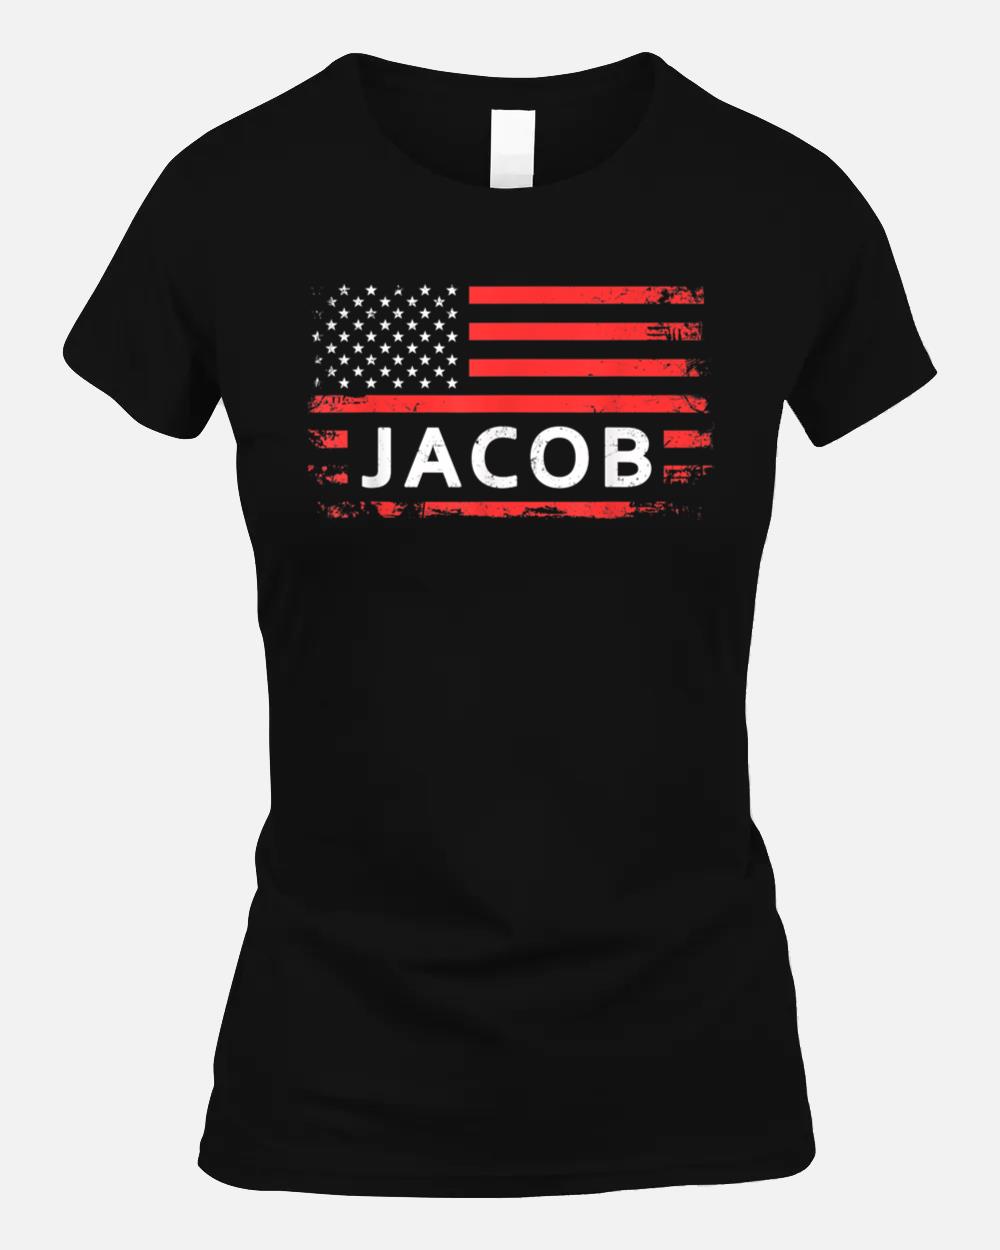 JACOB AMERICAN FLAG GIFTS FOR JACOB Unisex T-Shirt